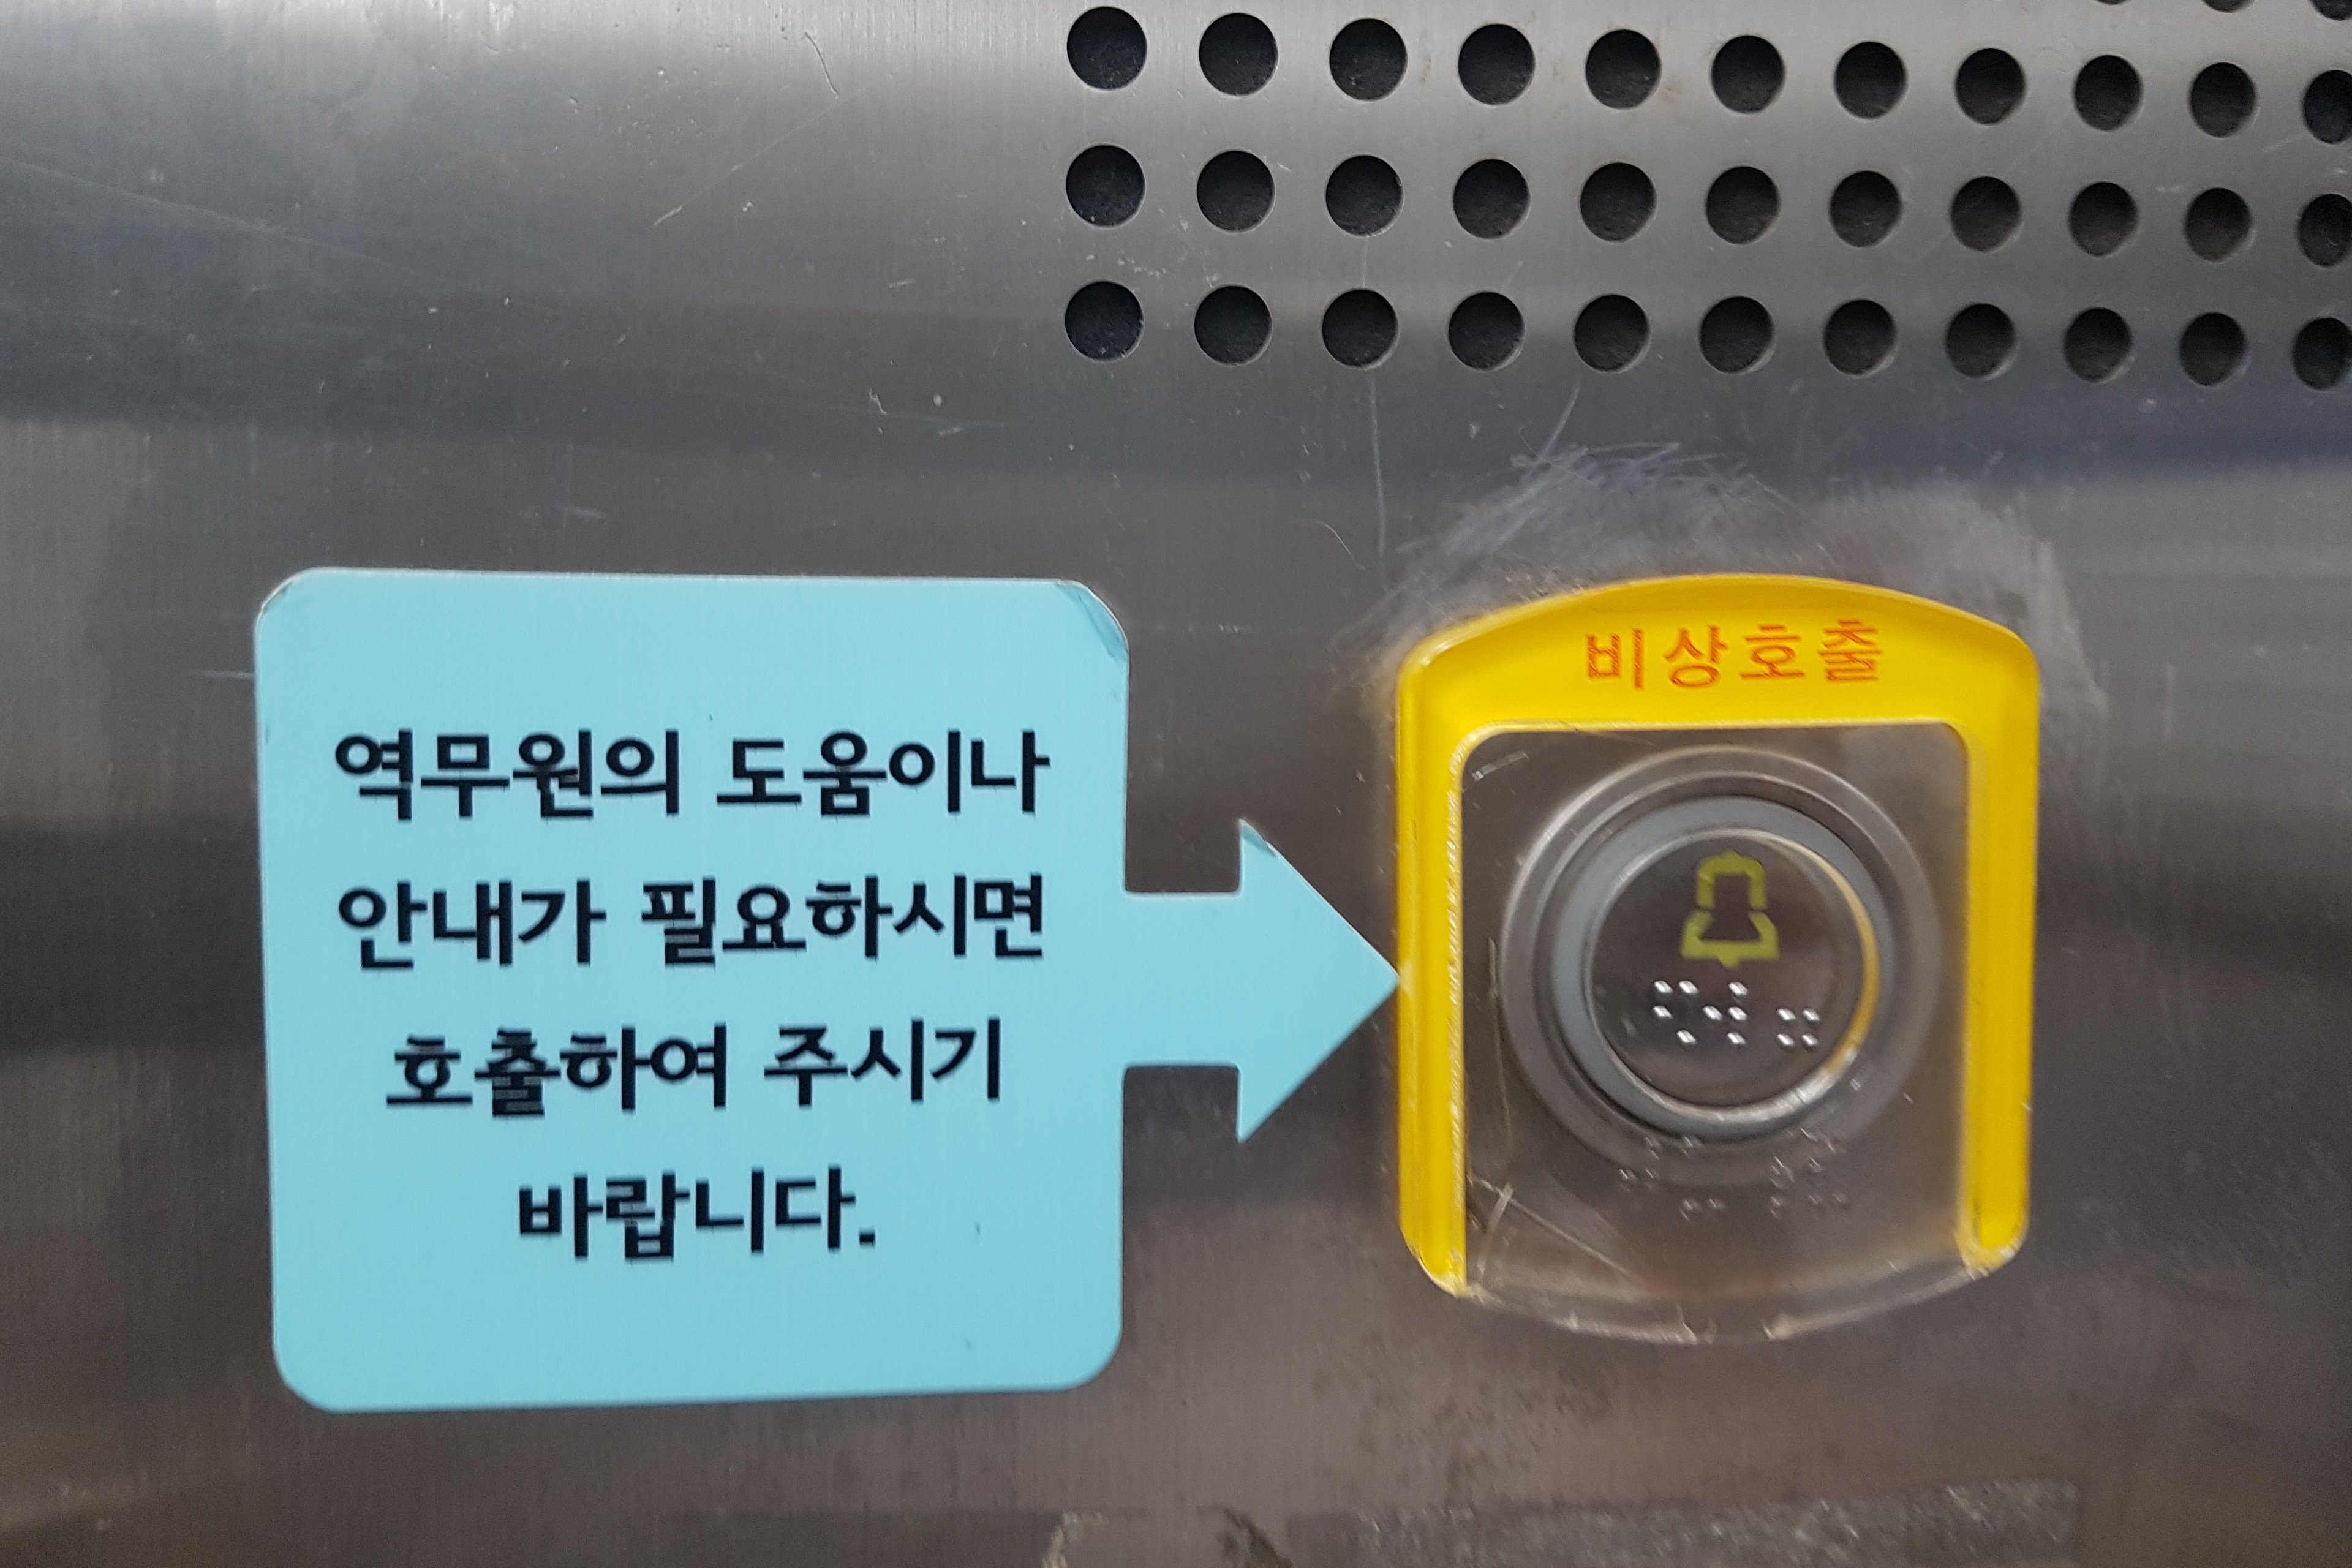 Elevator0 : An emergency bell in Dongdaemun Design Plaza's elevators
